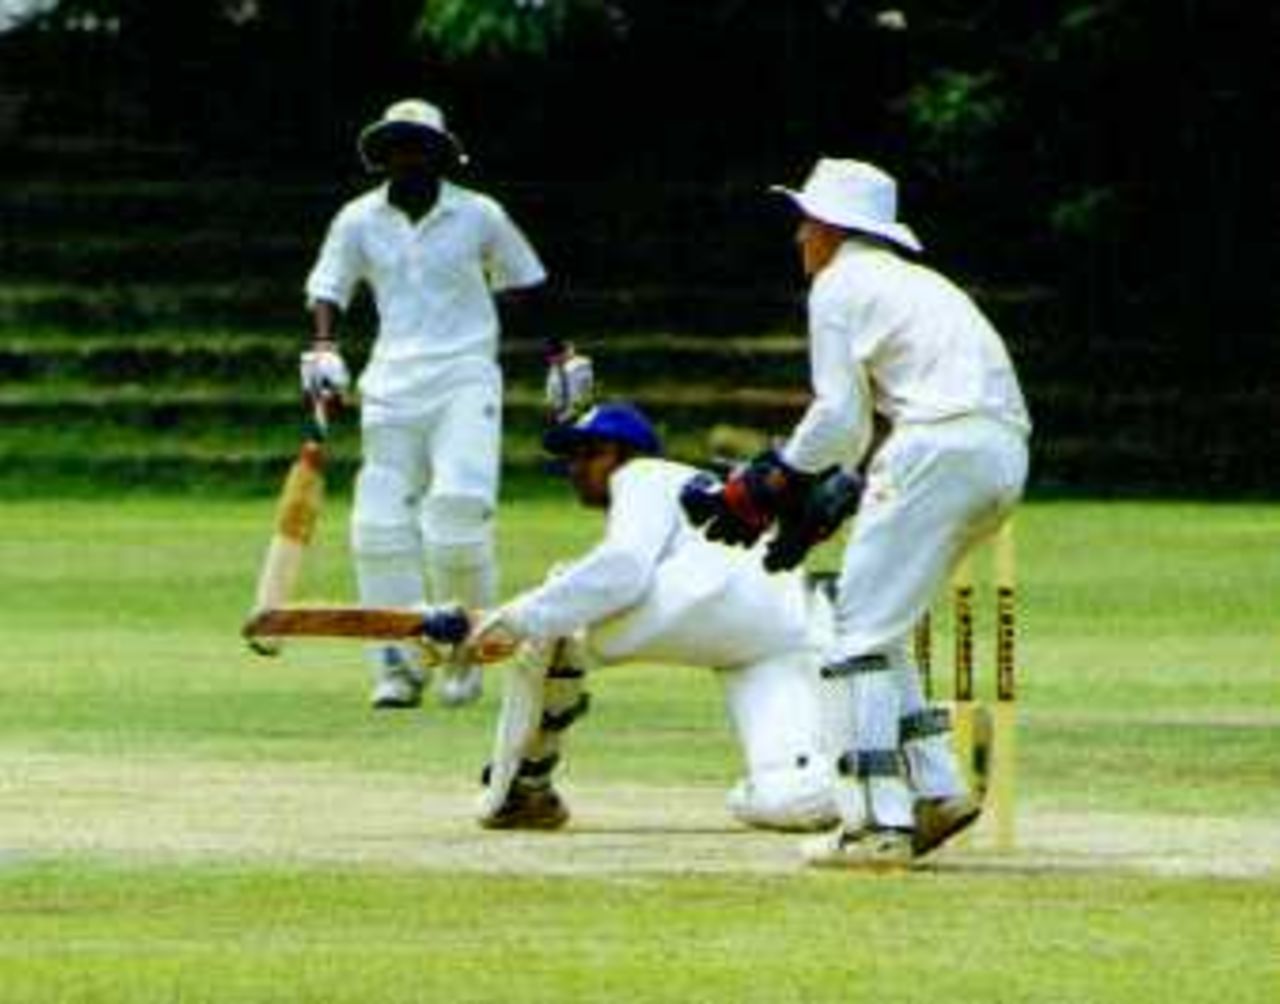 Hewage sweeps to leg; Zimbabwe 'A' in Sri Lanka, 1999/00, 1st